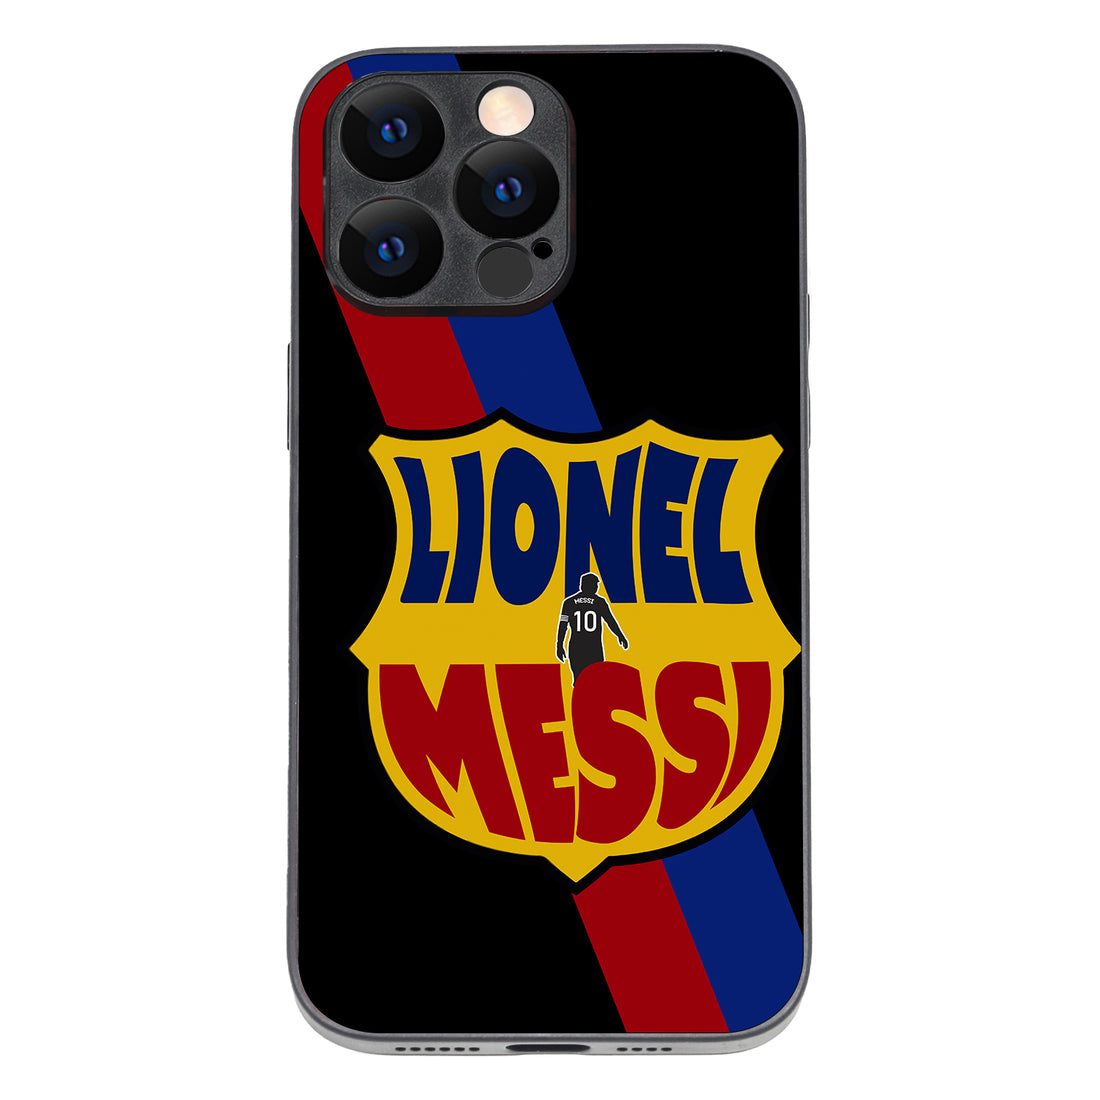 Lionel Messi Sports iPhone 14 Pro Max Case